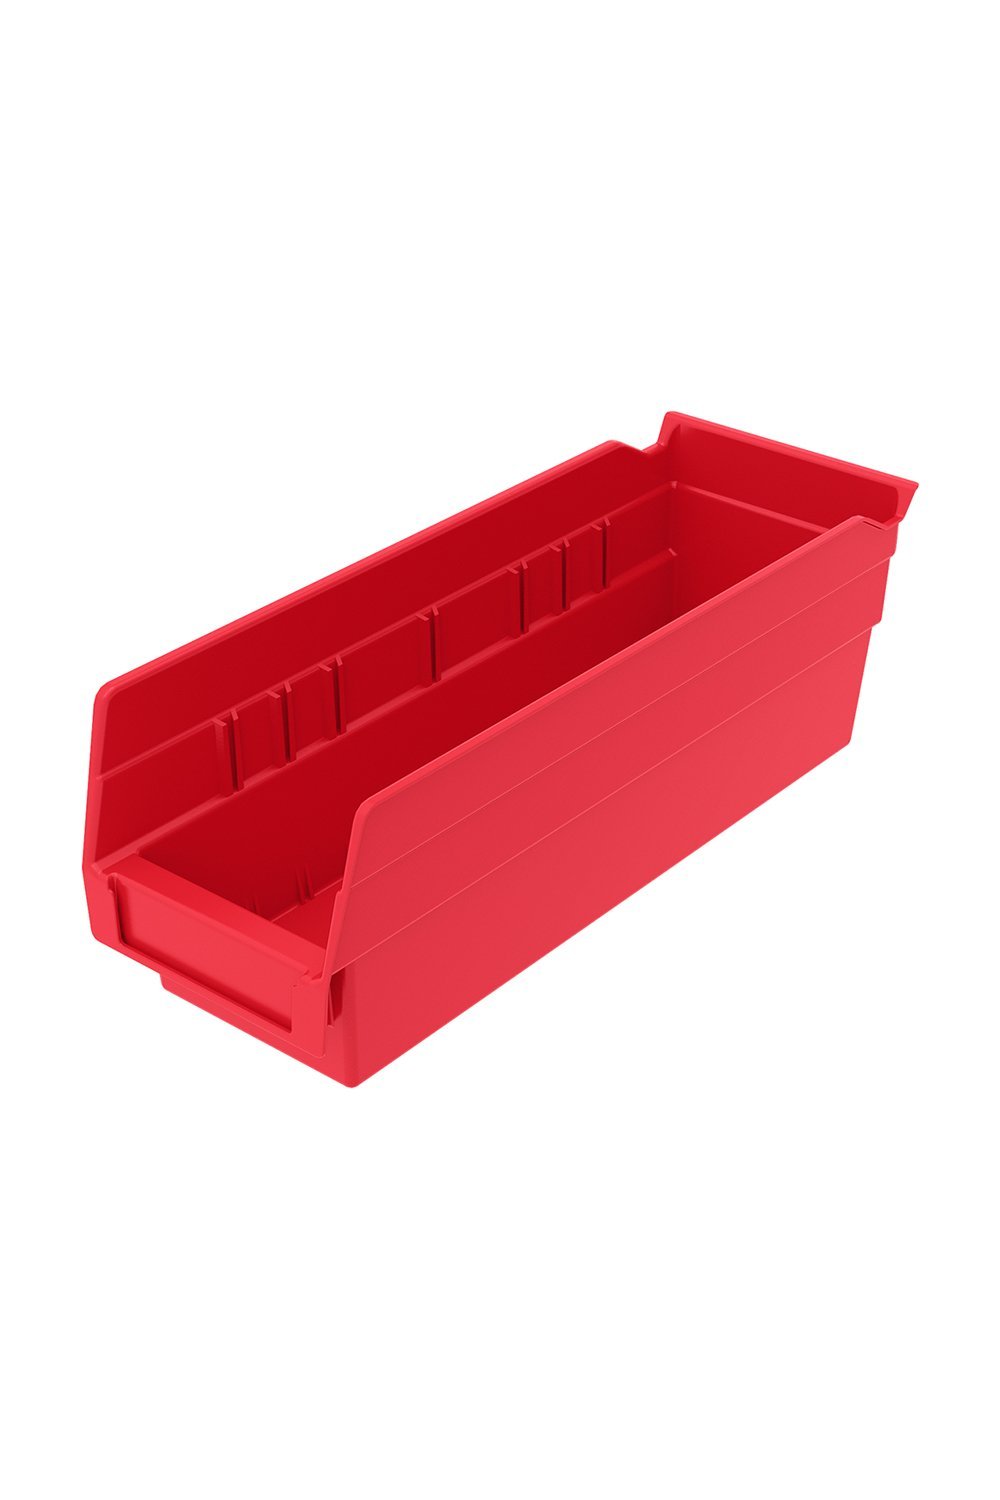 Shelf Bin for 12"D Shelves Bins & Containers Acart 11-5/8'' x 4-1/8'' x 4'' Red 